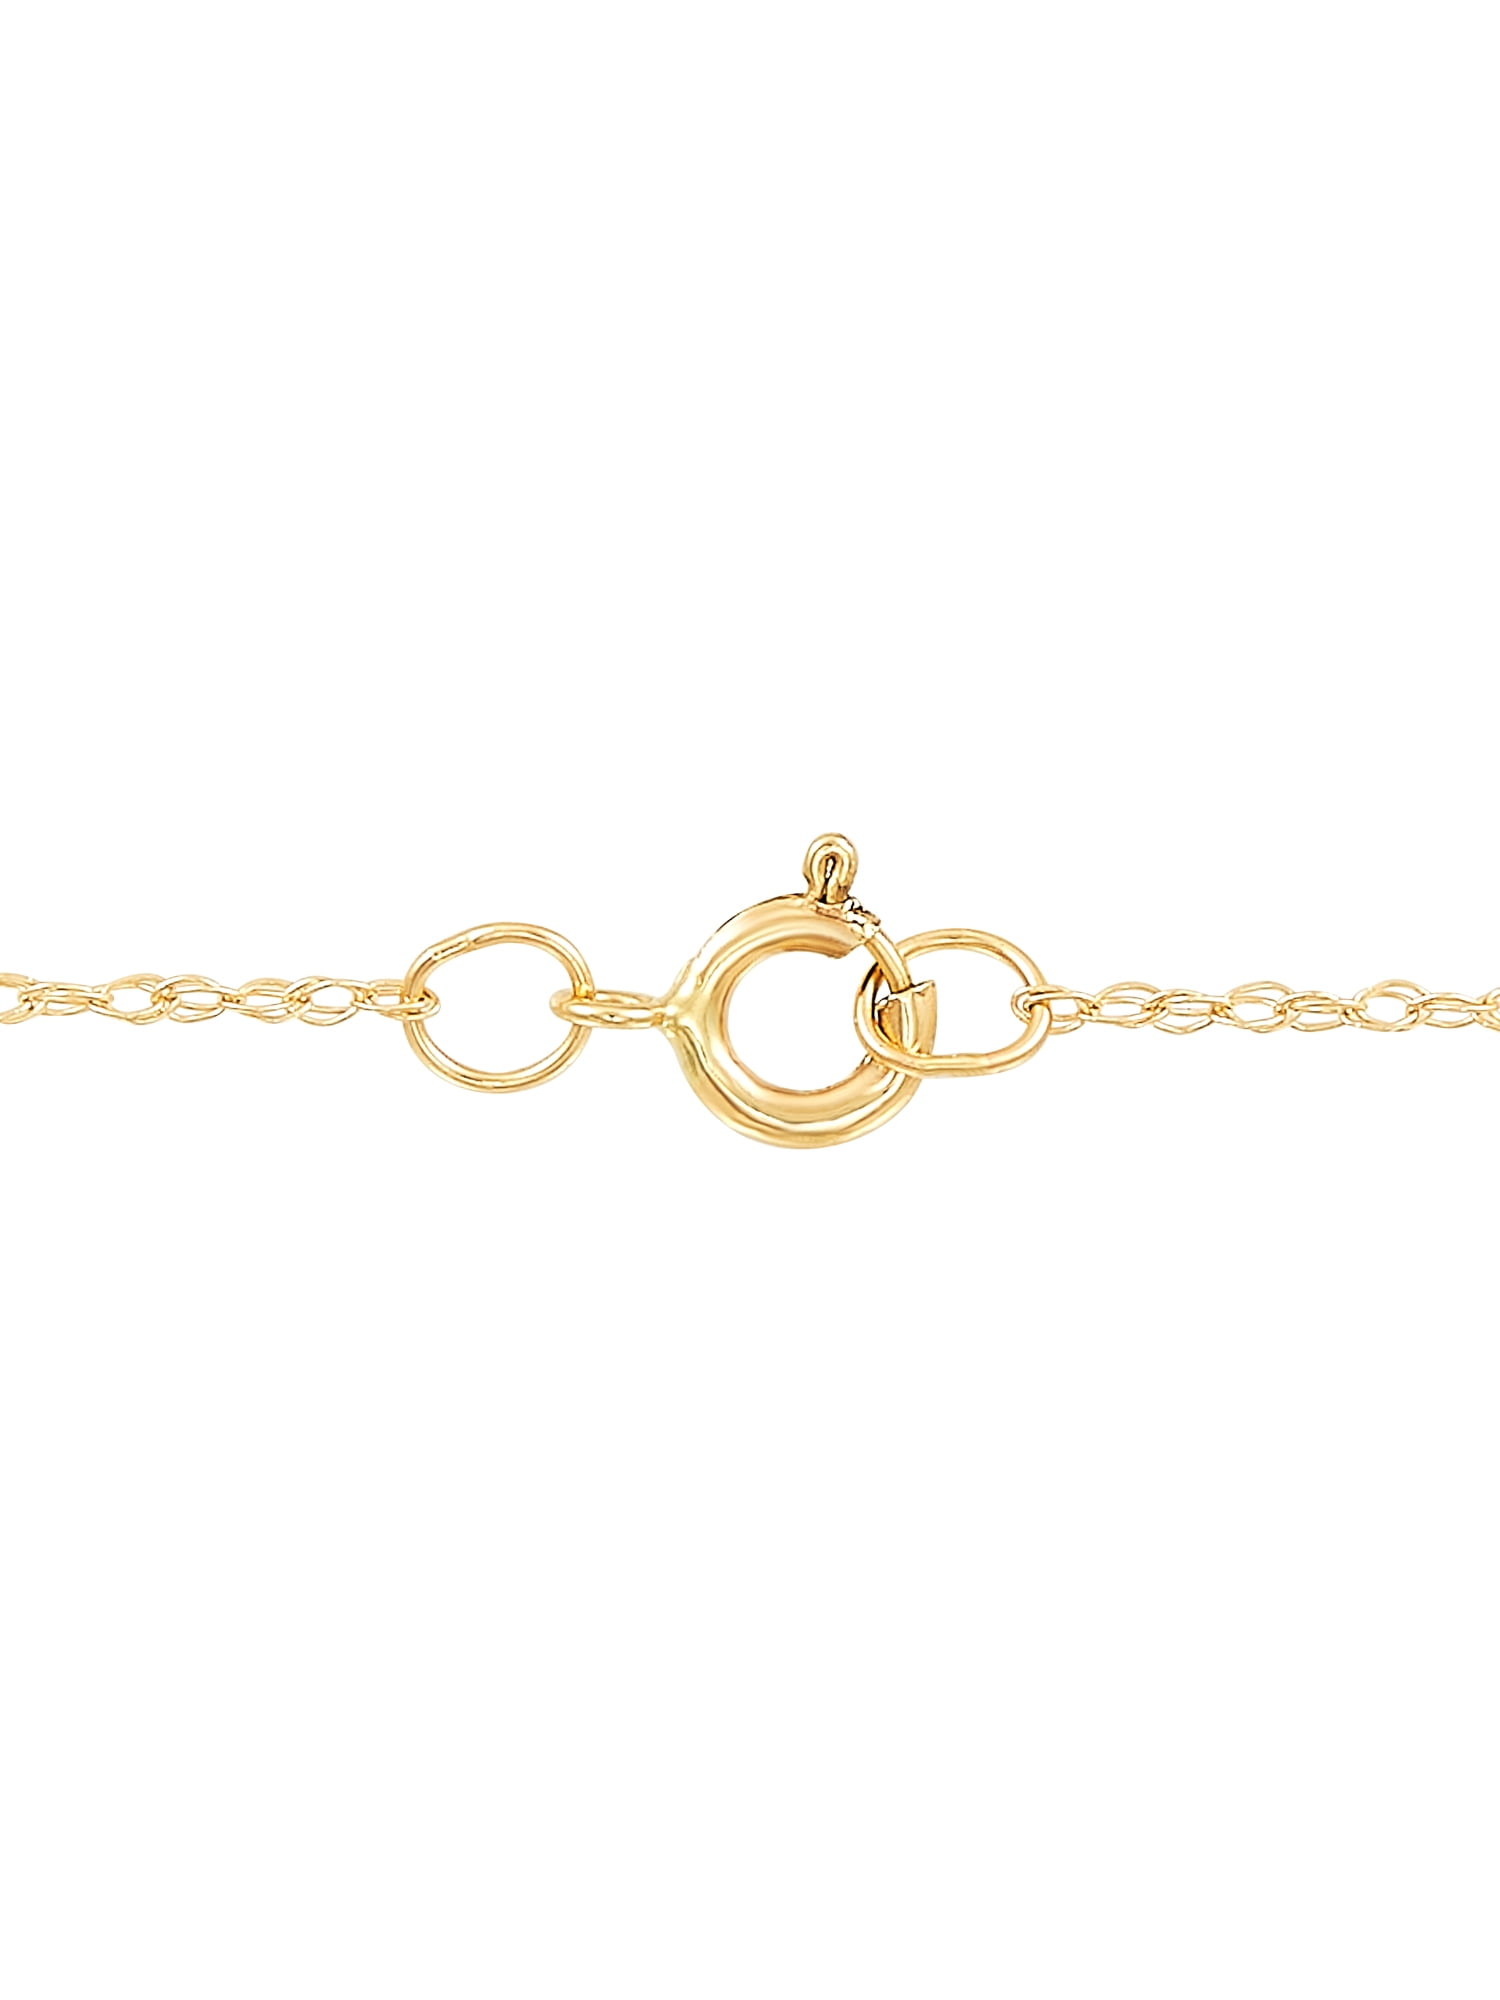 Brilliance Fine Jewelry 10K Yellow Gold with Rhodium Cross Pendant  Necklace,18